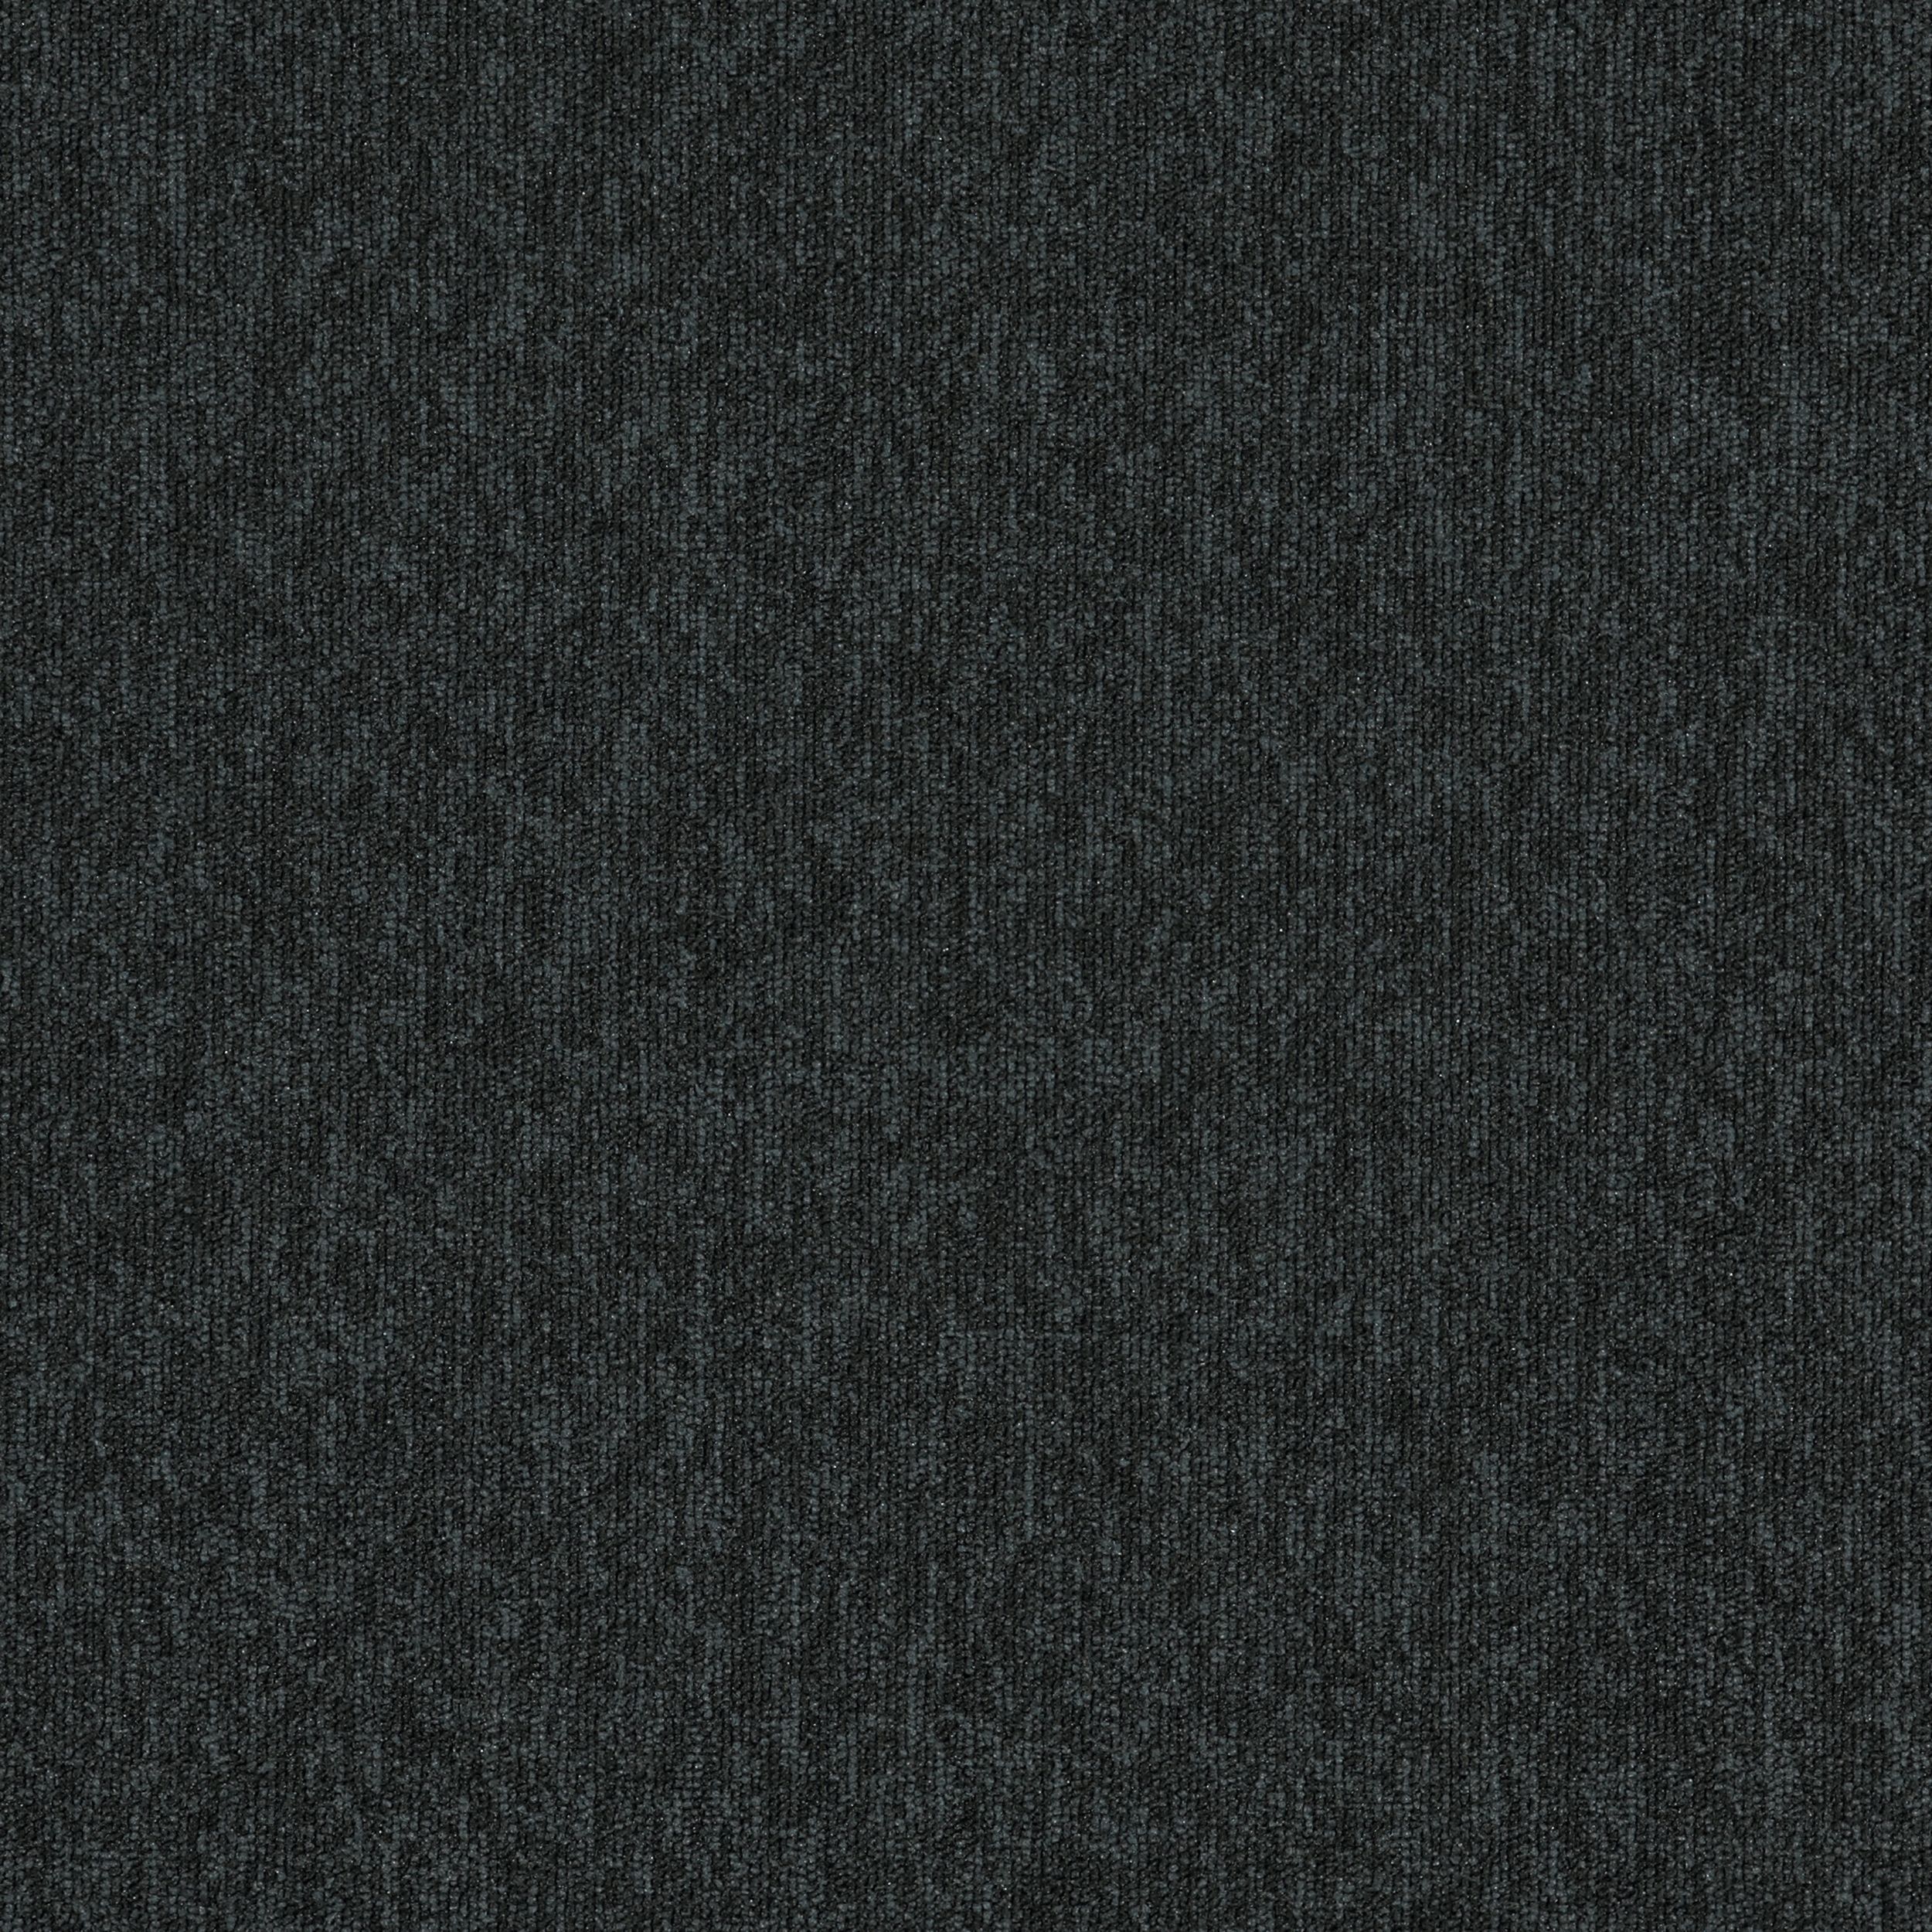 New Horizons II Carpet Tile In Carbon número de imagen 2